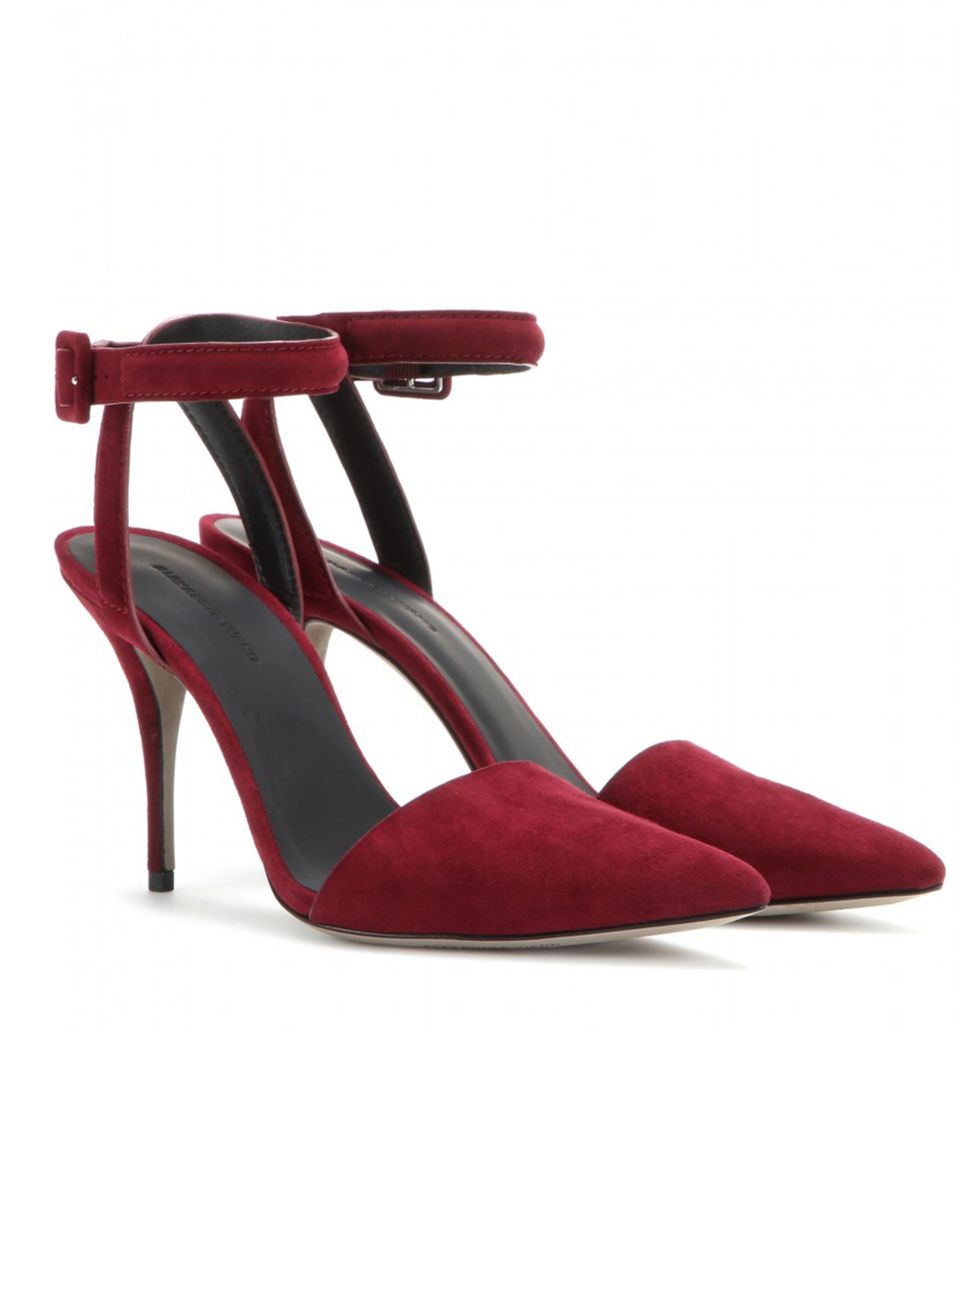 High heels, Red, Sandal, Basic pump, Carmine, Maroon, Foot, Slingback, Strap, Court shoe, 